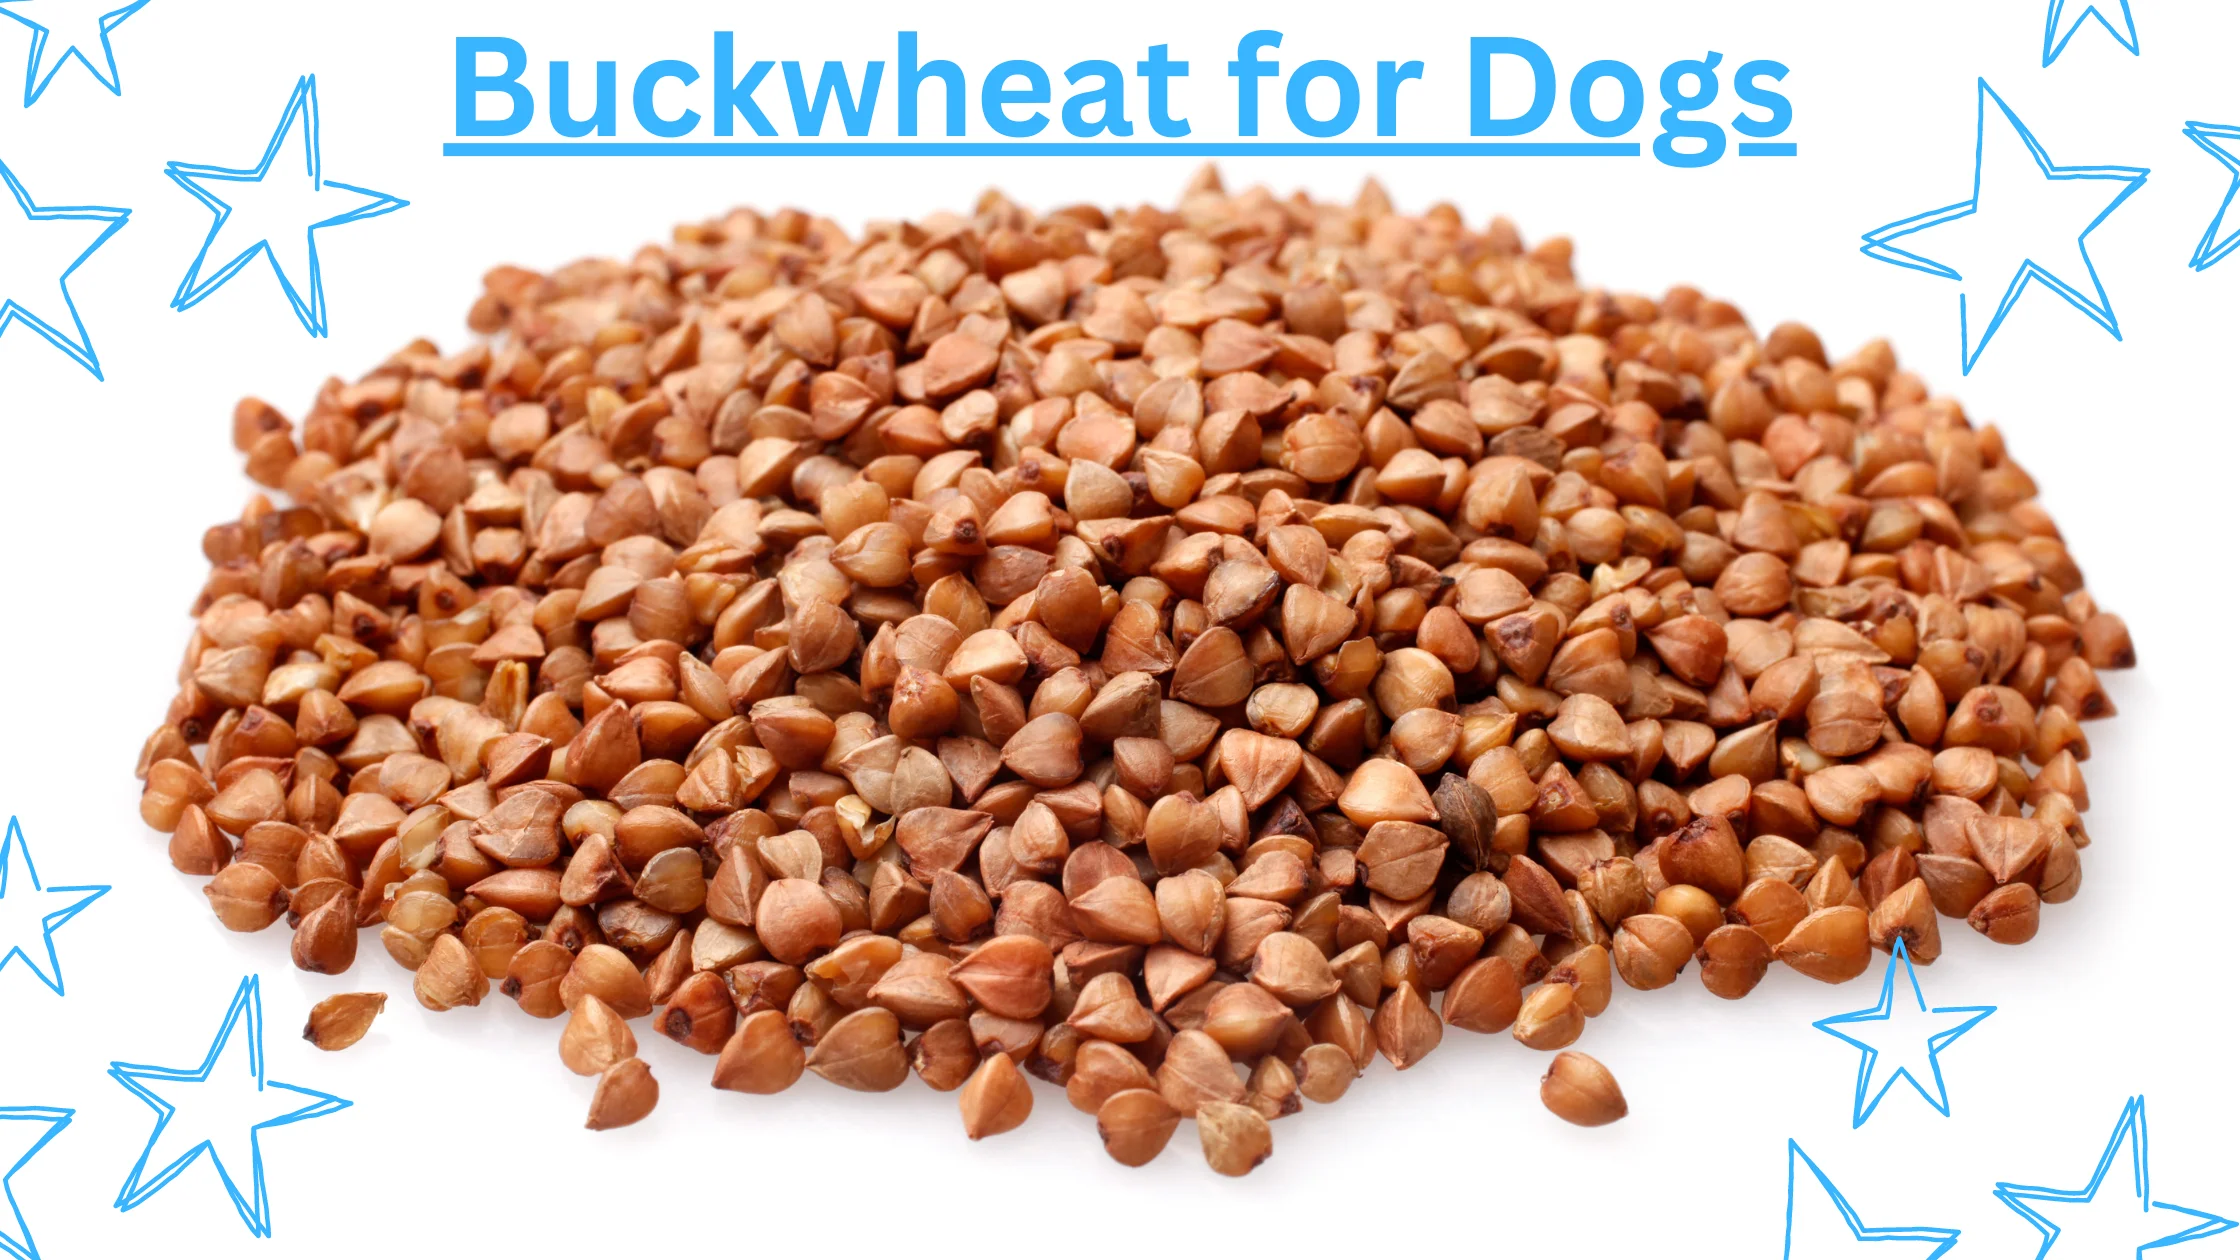 Buckwheat for Dogs